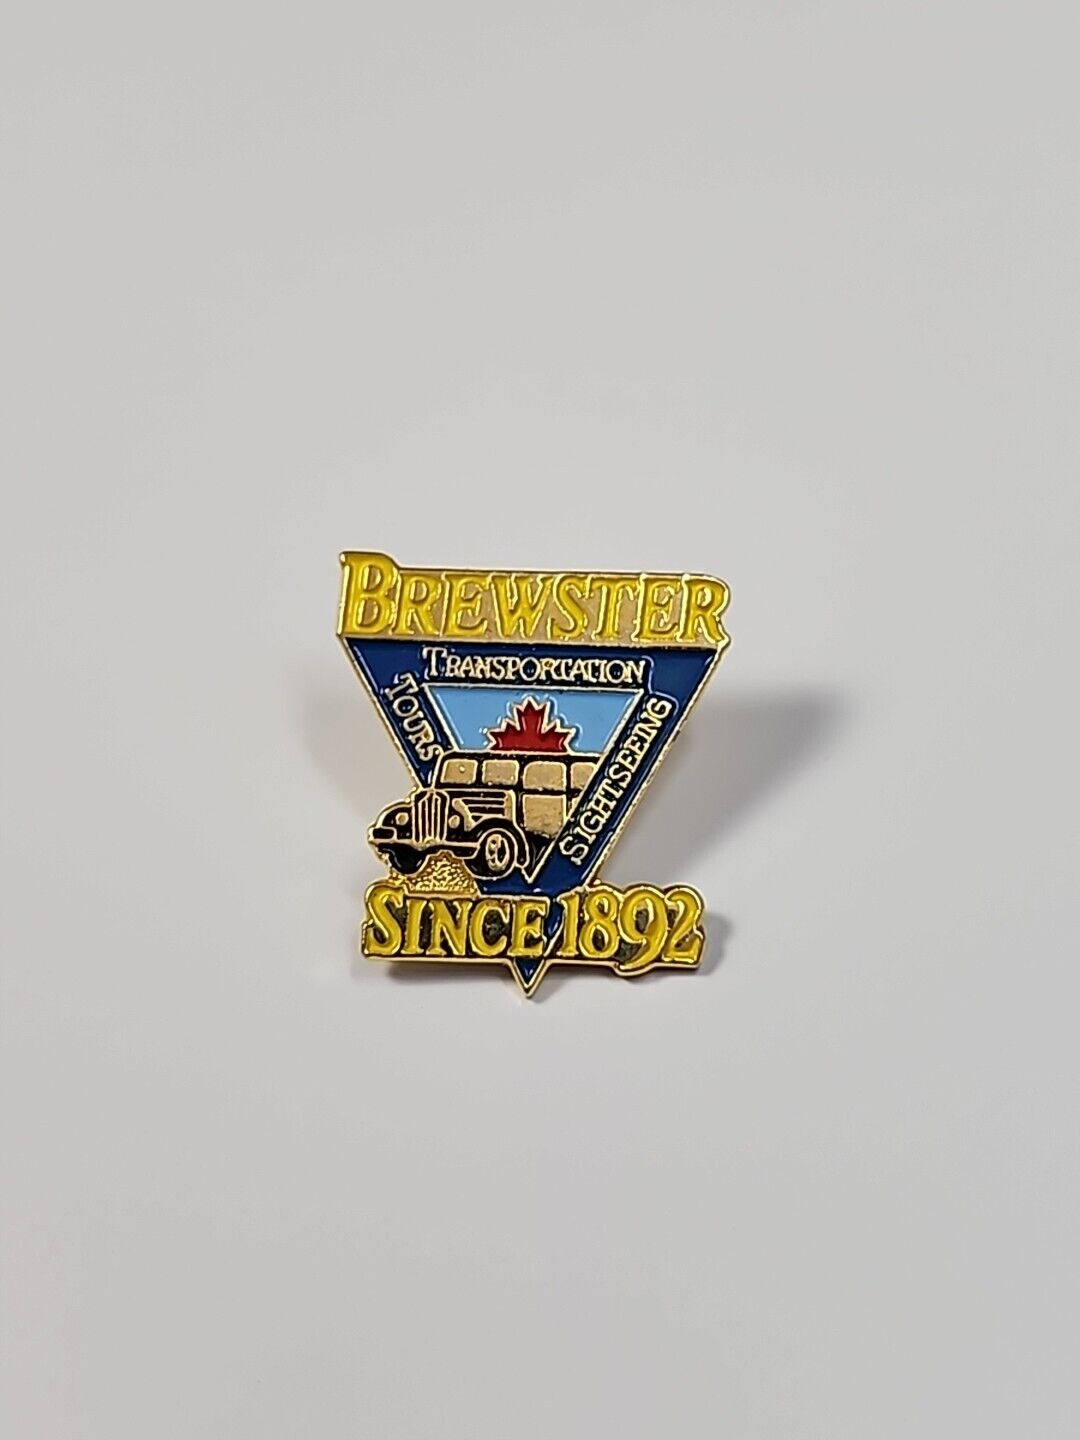 Brewster Since 1892 Tours Transportation Sightseeing Travel Souvenir Lapel Pin